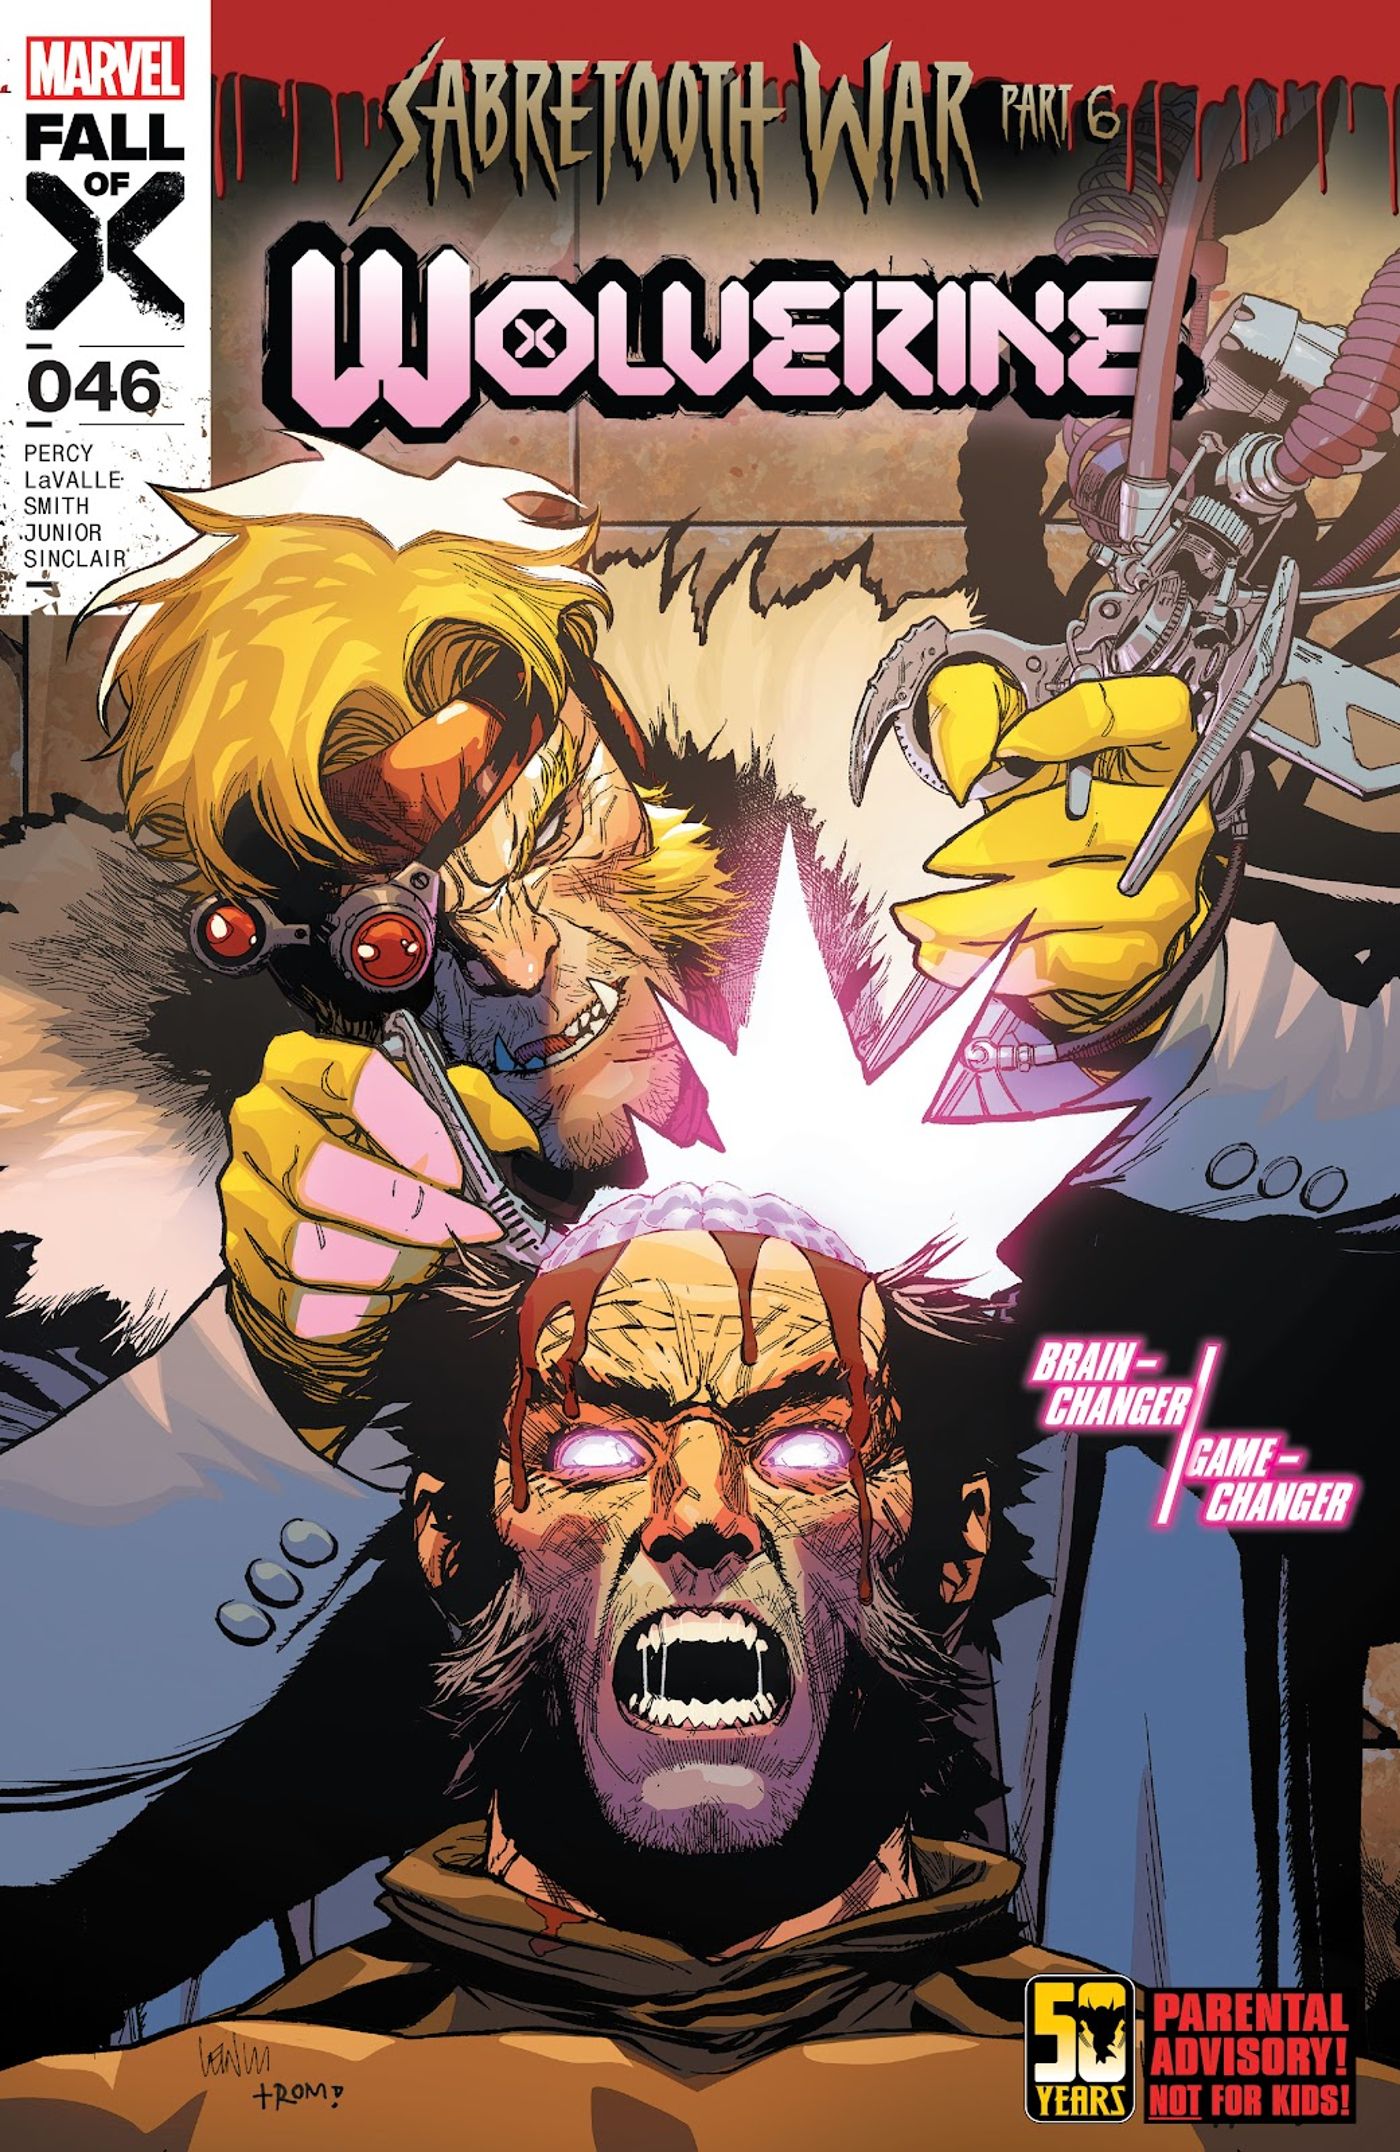 Sabertooth lobotomiza Wolverine com energia psíquica. 